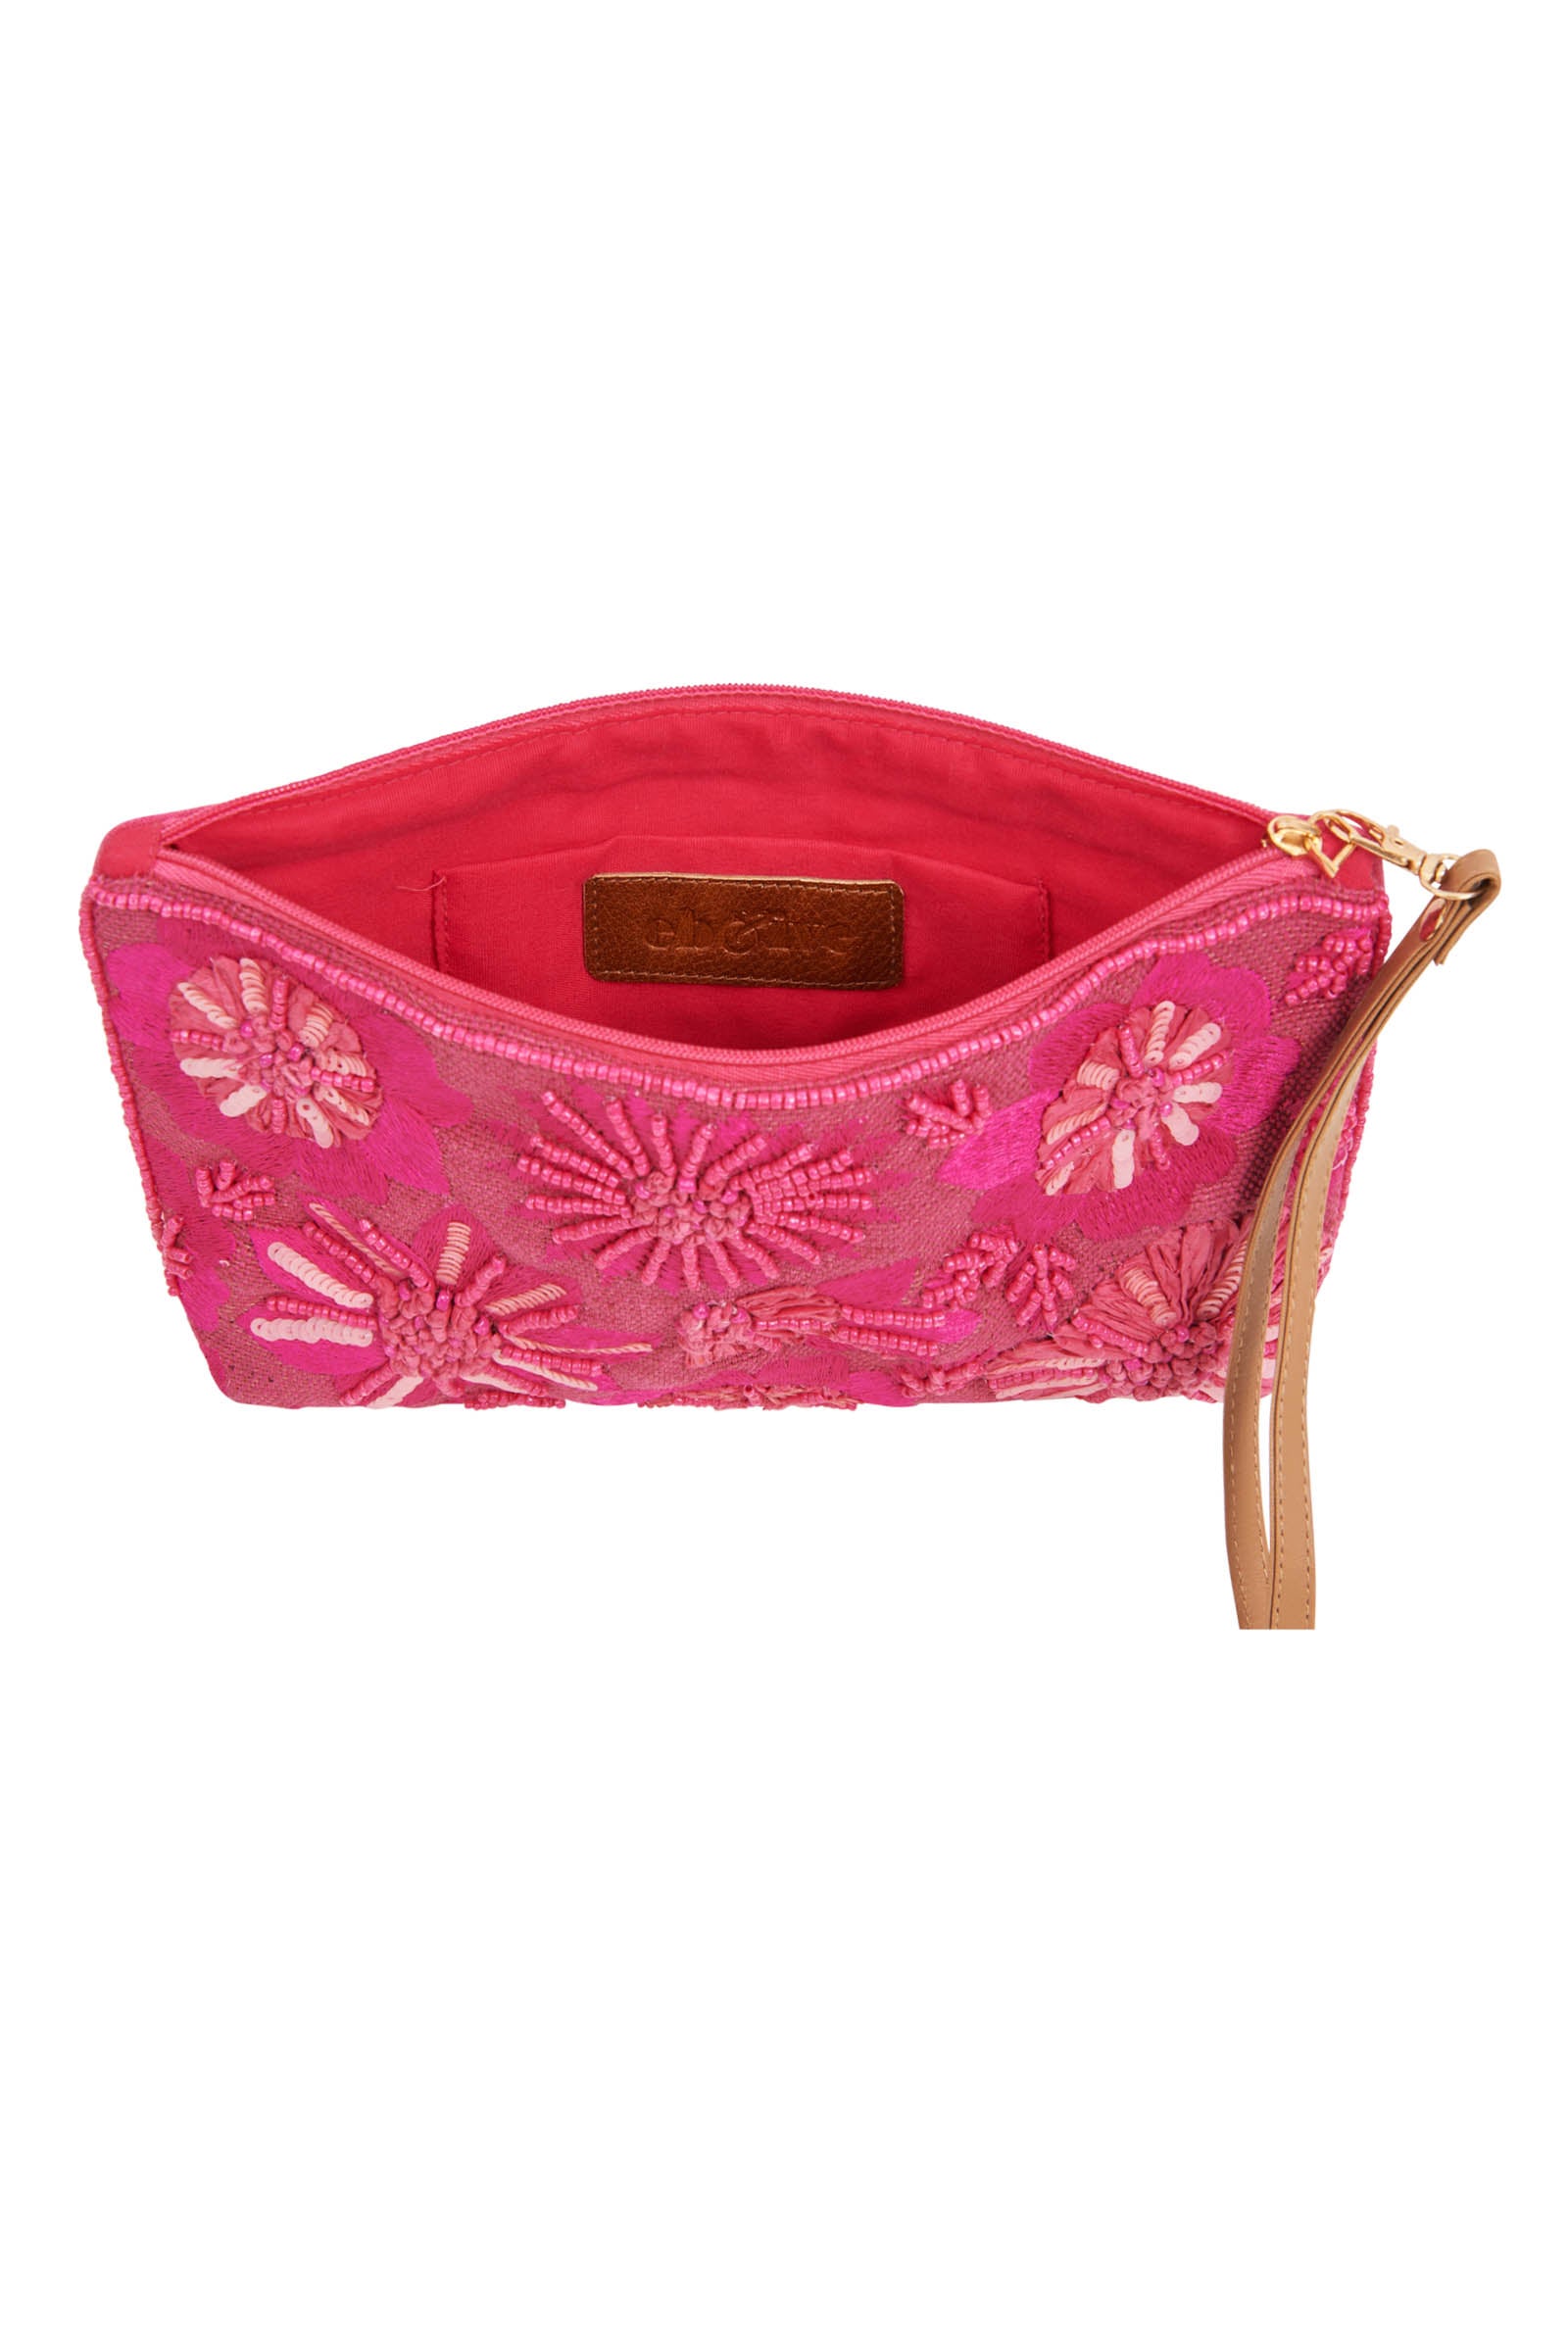 Kate Spade Candy Wrapper Clutch Bag Whimsie Pink Hologram | eBay